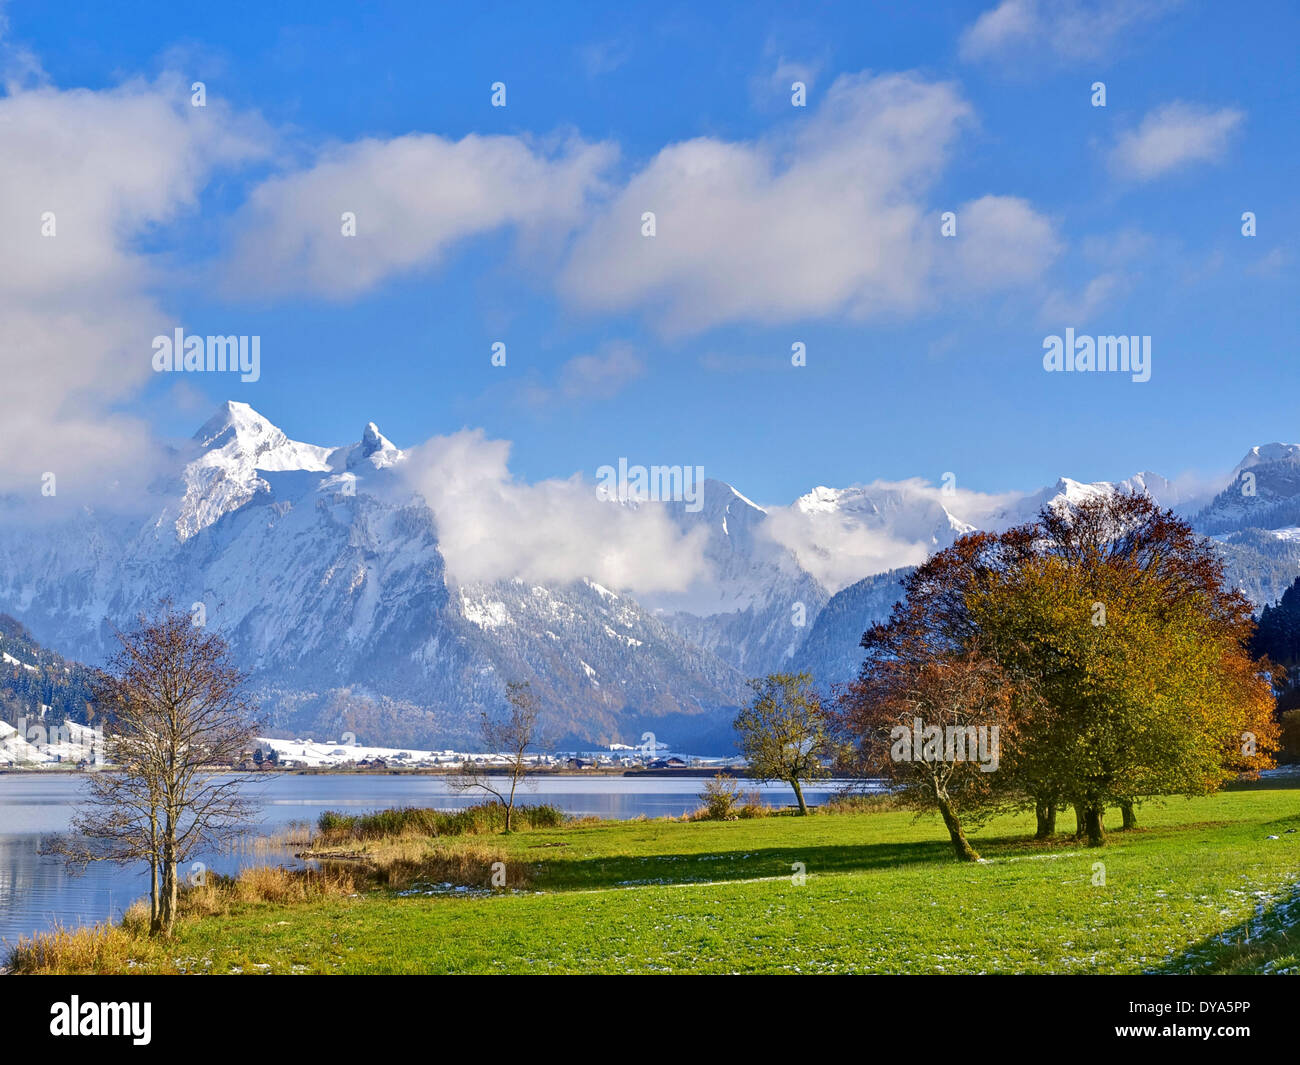 Switzerland, Europe, canton Zug, Aegerisee, Alps, mountains, grass, green, fruit-trees, snow, lake, Stock Photo